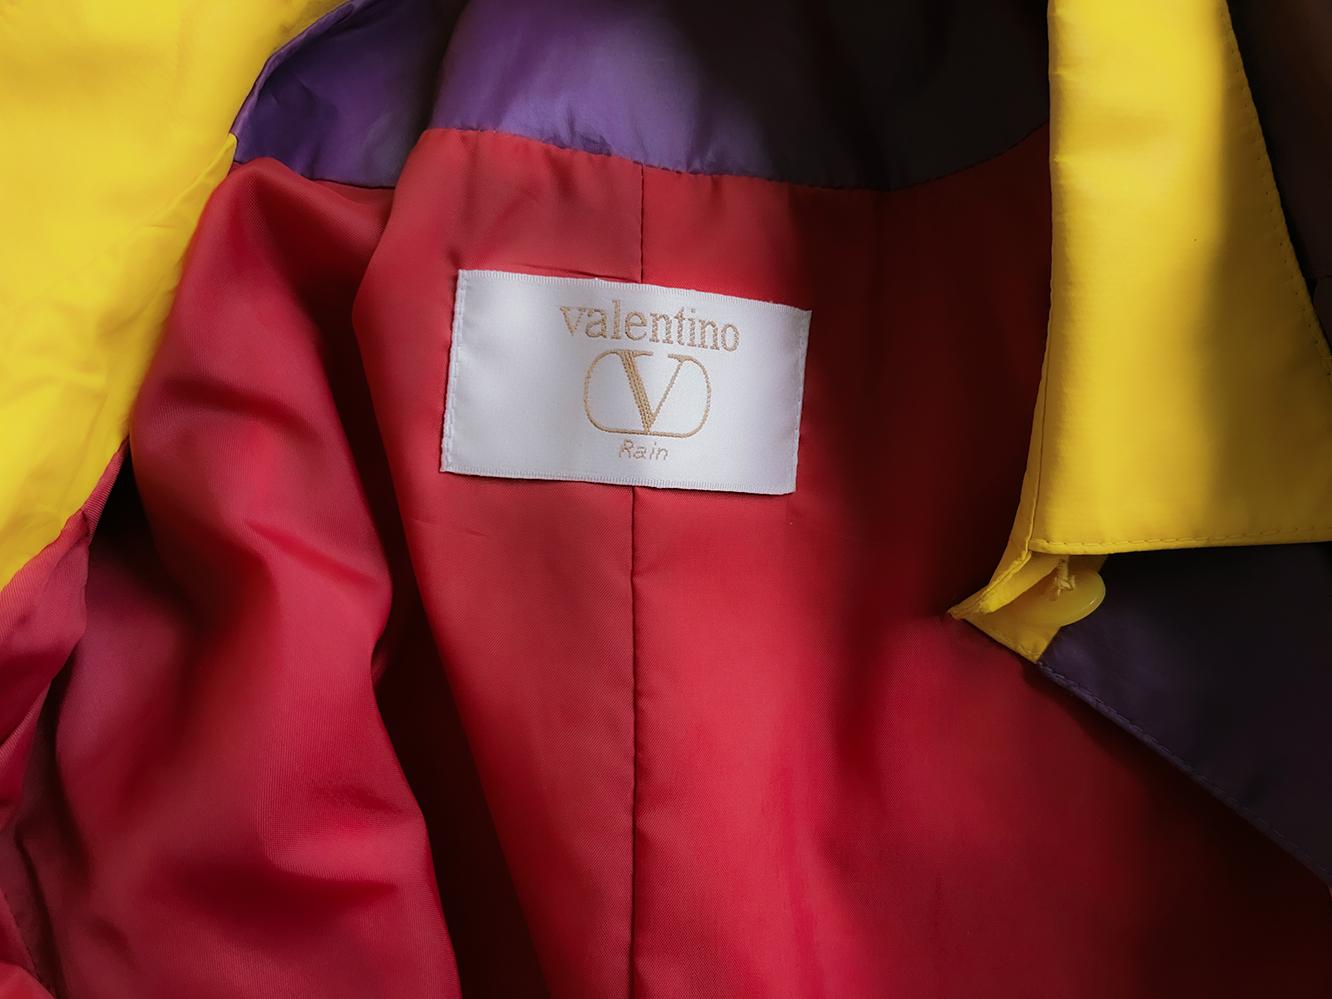 Seltener Valentino Regenmantel Vintage Trenchcoat Lila Violett Gelb Damen im Angebot